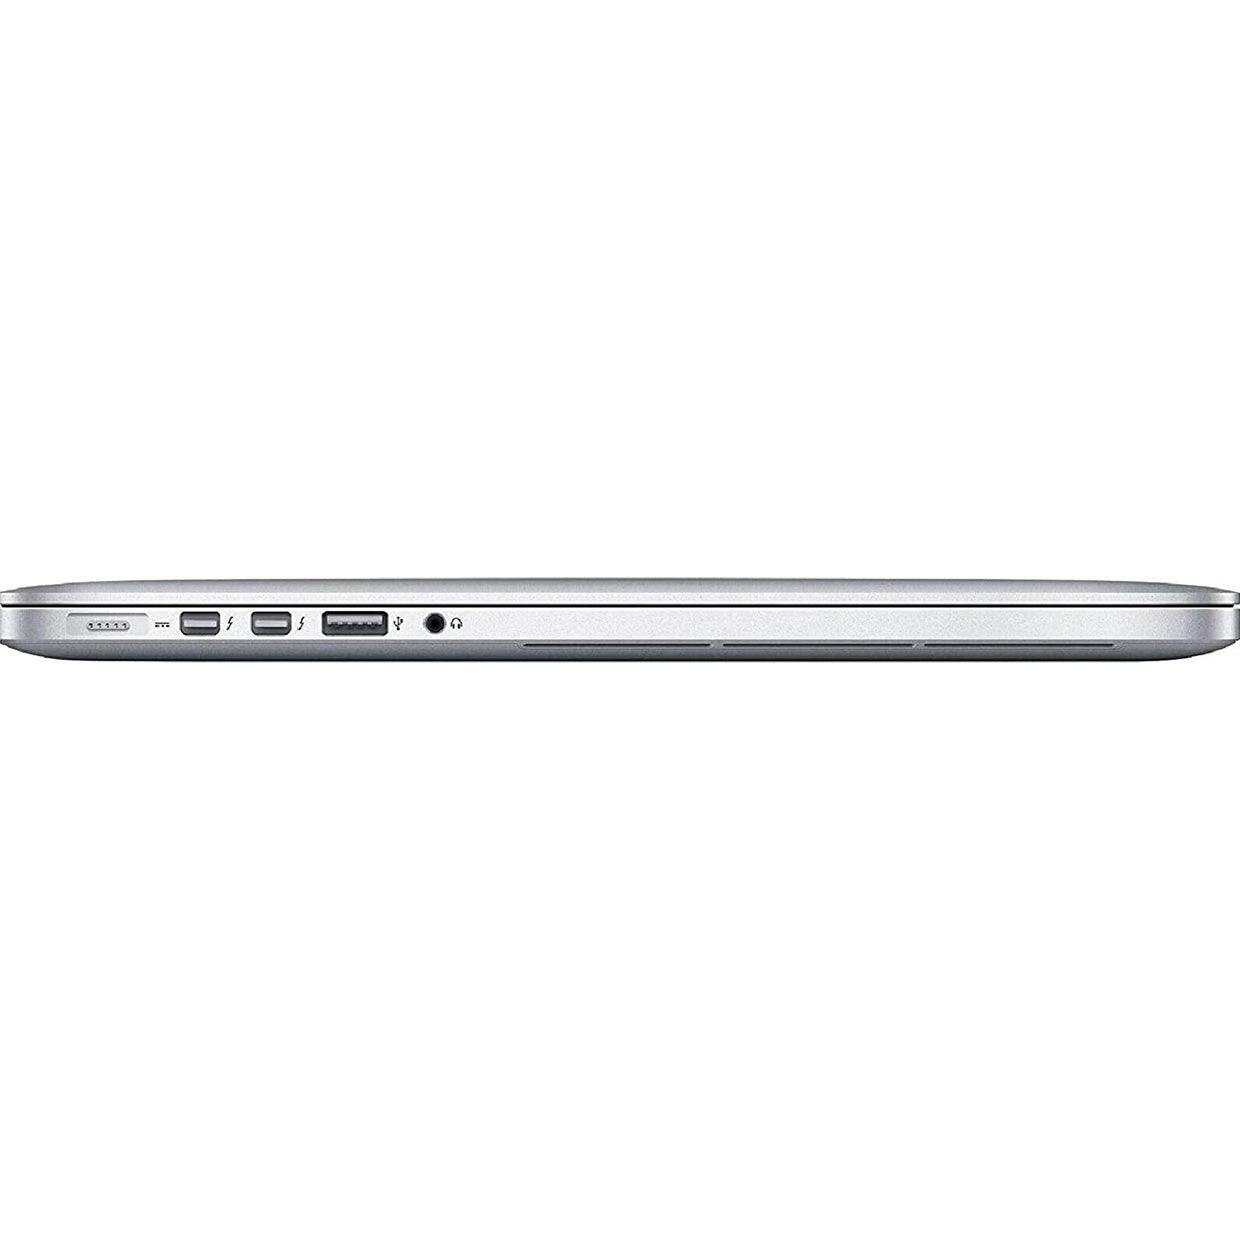 Apple MacBook Pro A1398, 2015 with 15.4-Inch, i7, 5th Gen, 16GB RAM, 512SSD